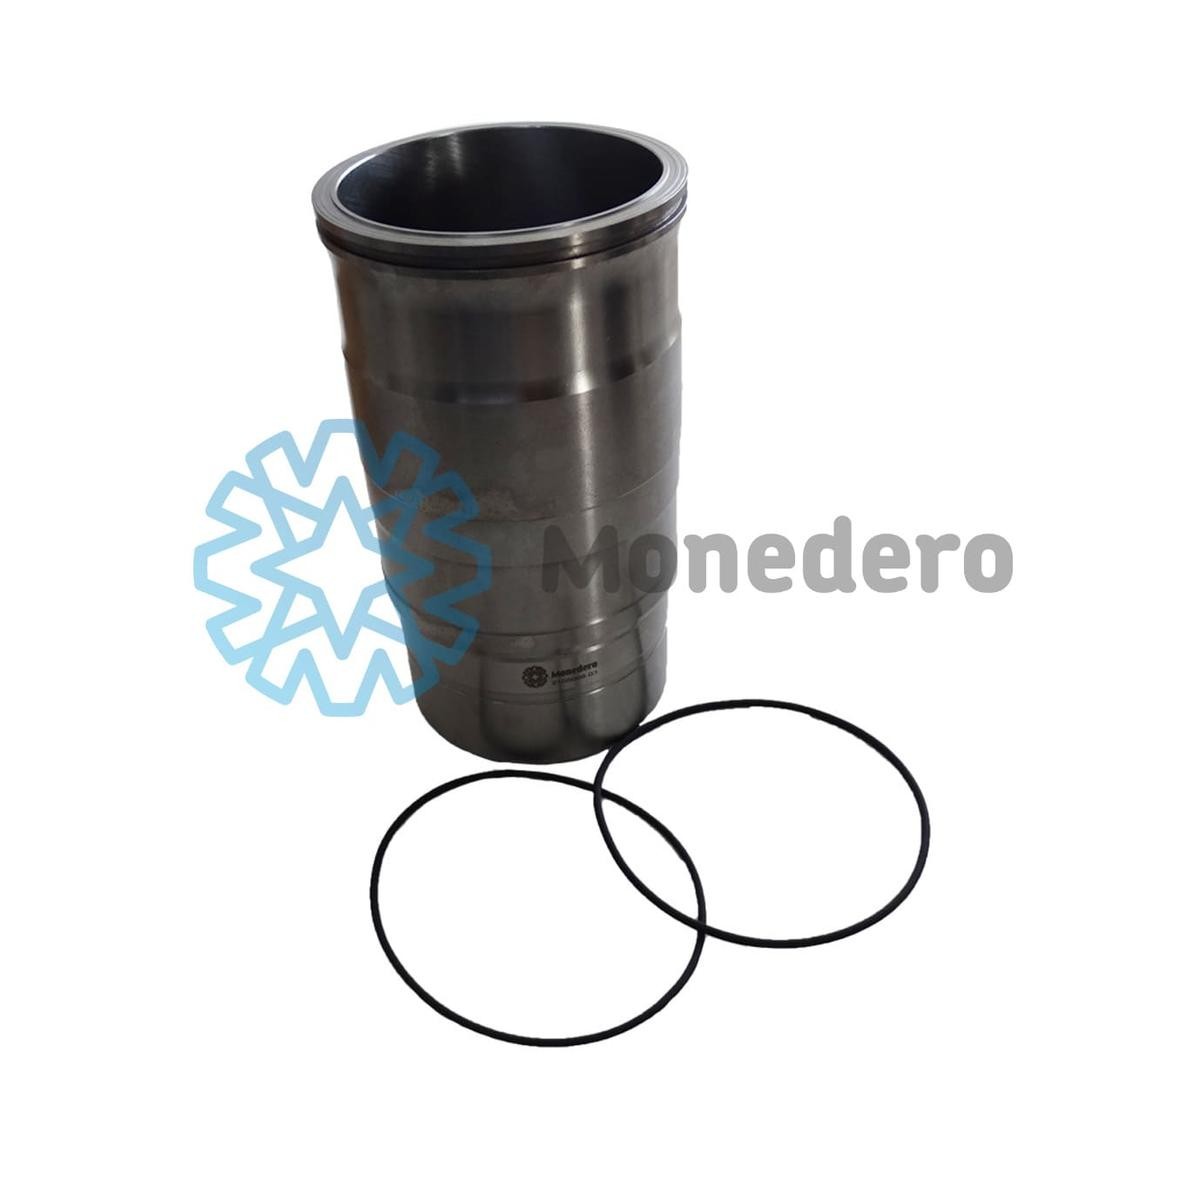 MONEDERO 40011300004 Cylinder Sleeve 1891882